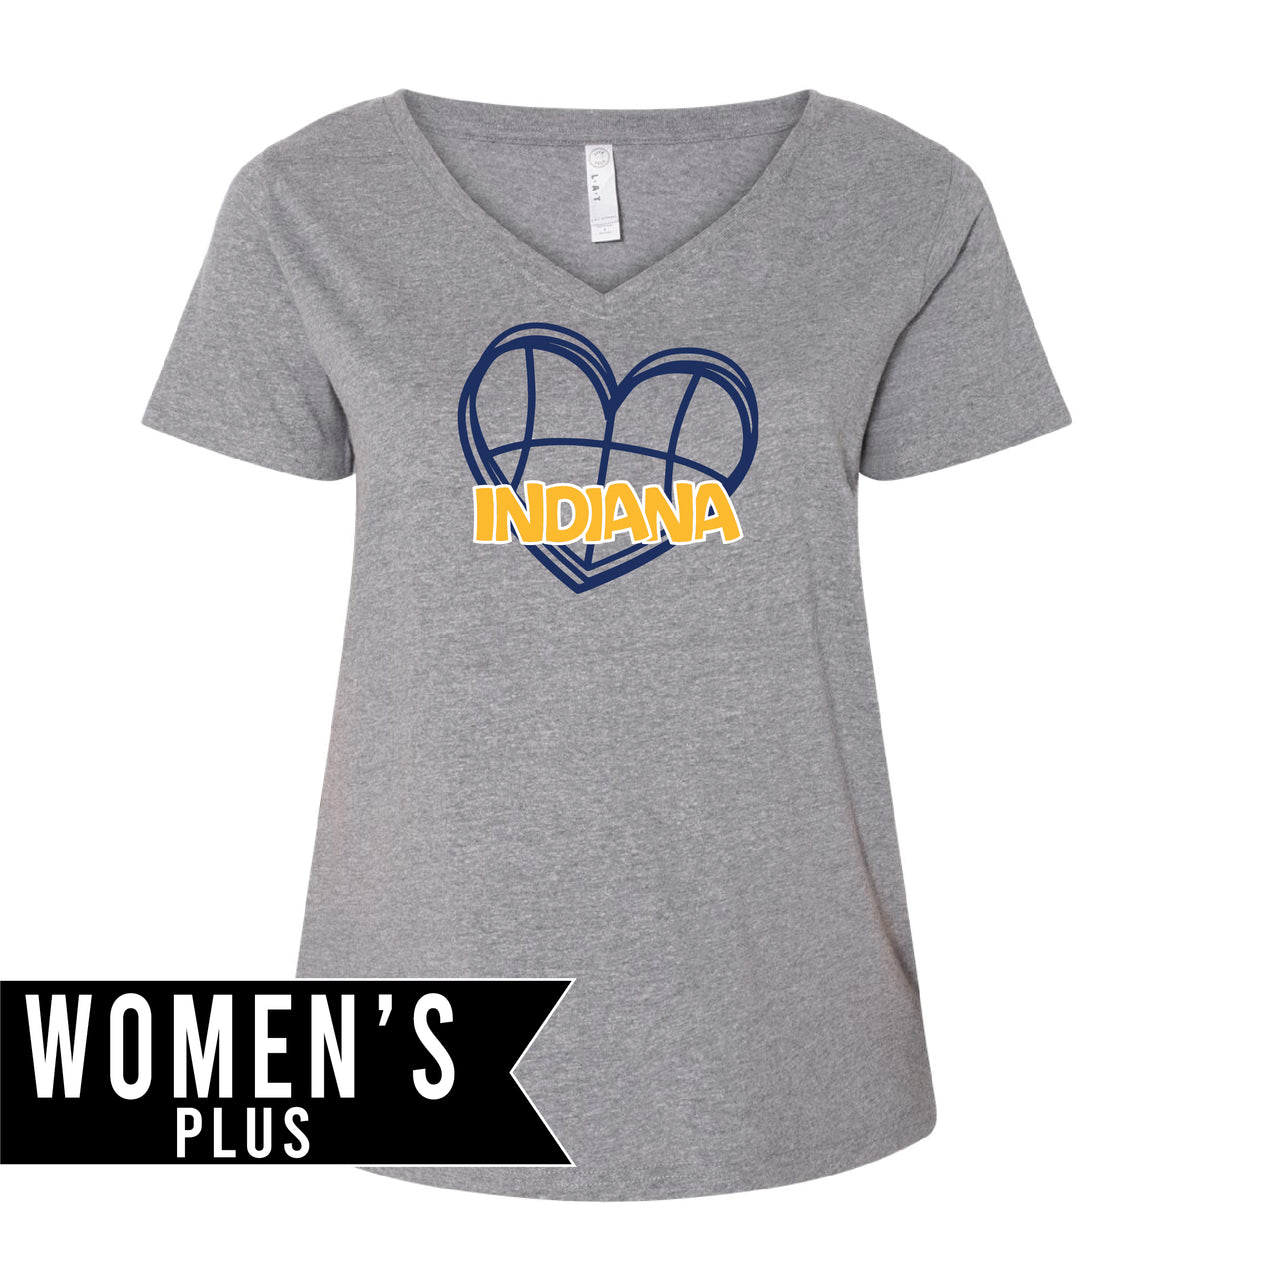 Plus Size Women's Premium Jersey V-Neck Tee - Indiana Basketball